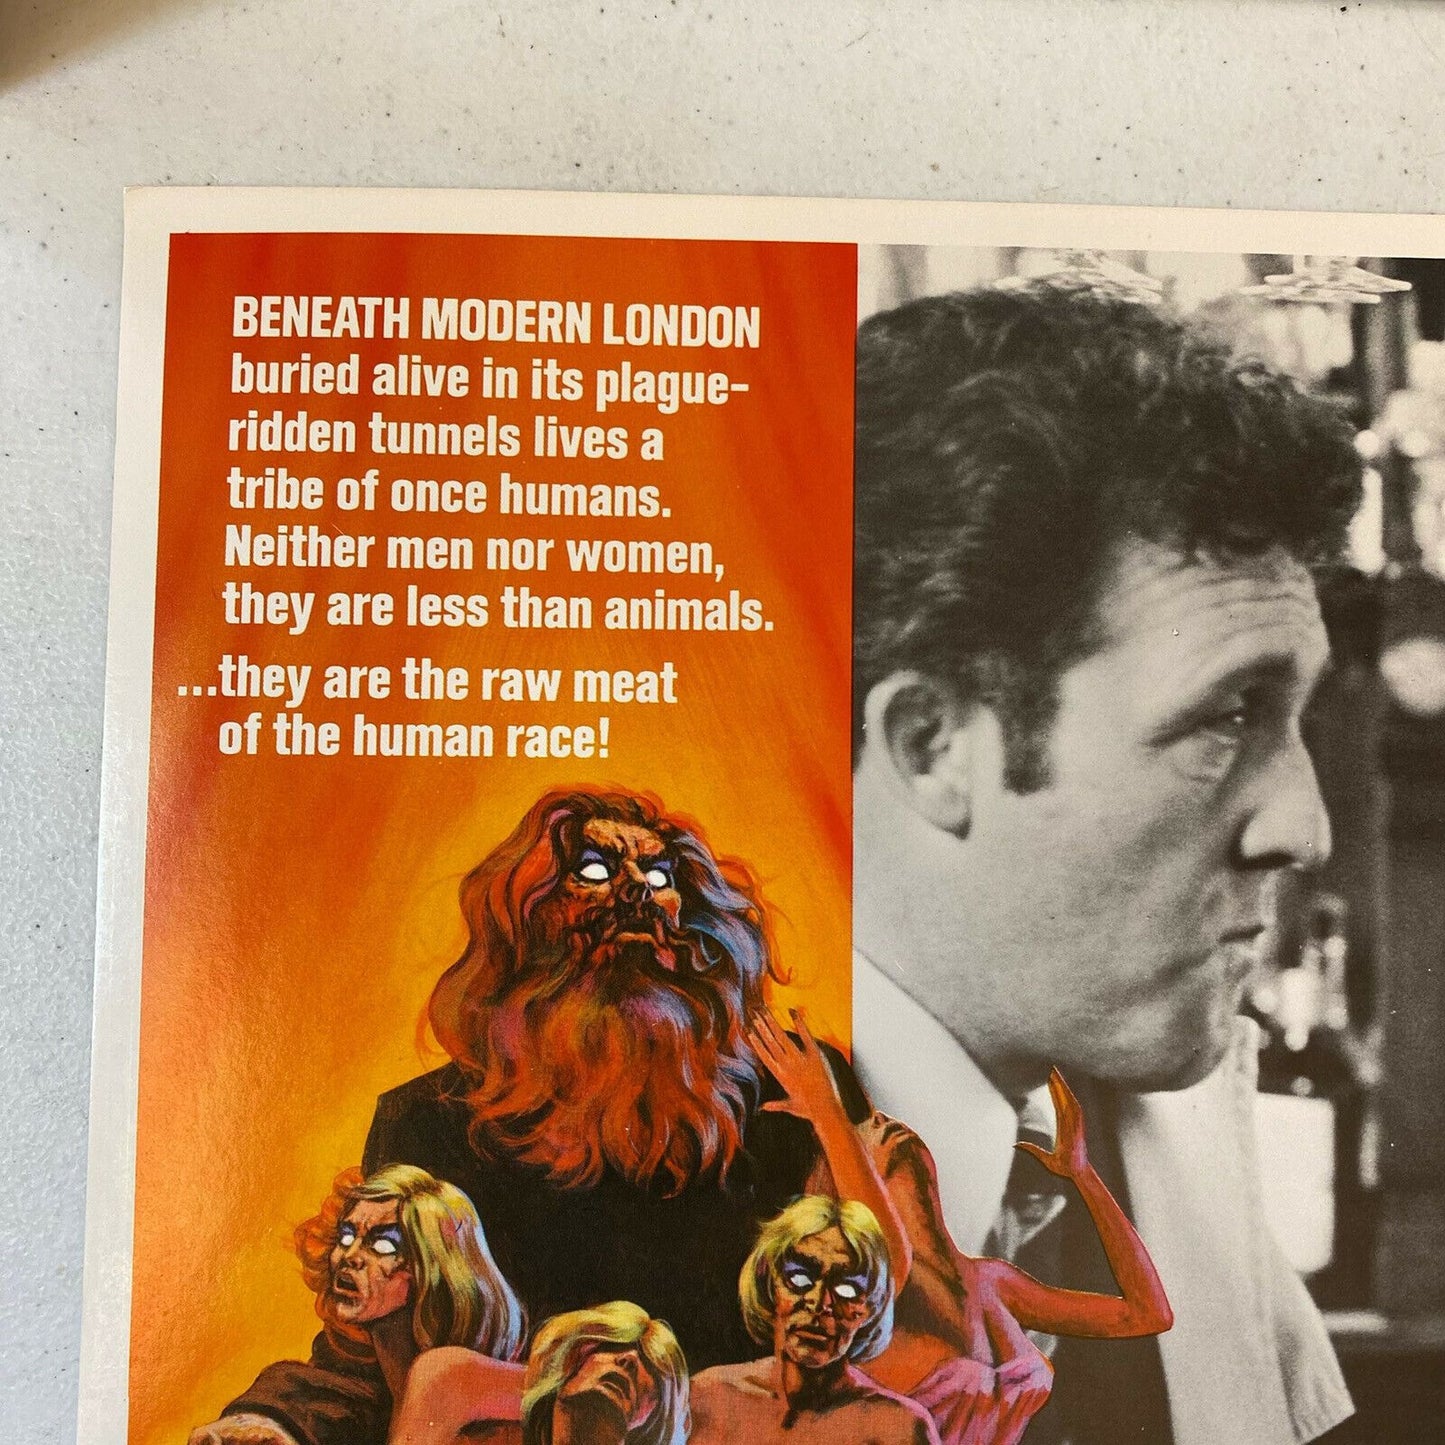 Raw Meat ORIGINAL Movie Theater Lobby Card 1973 Zombie Genre Movie Poster